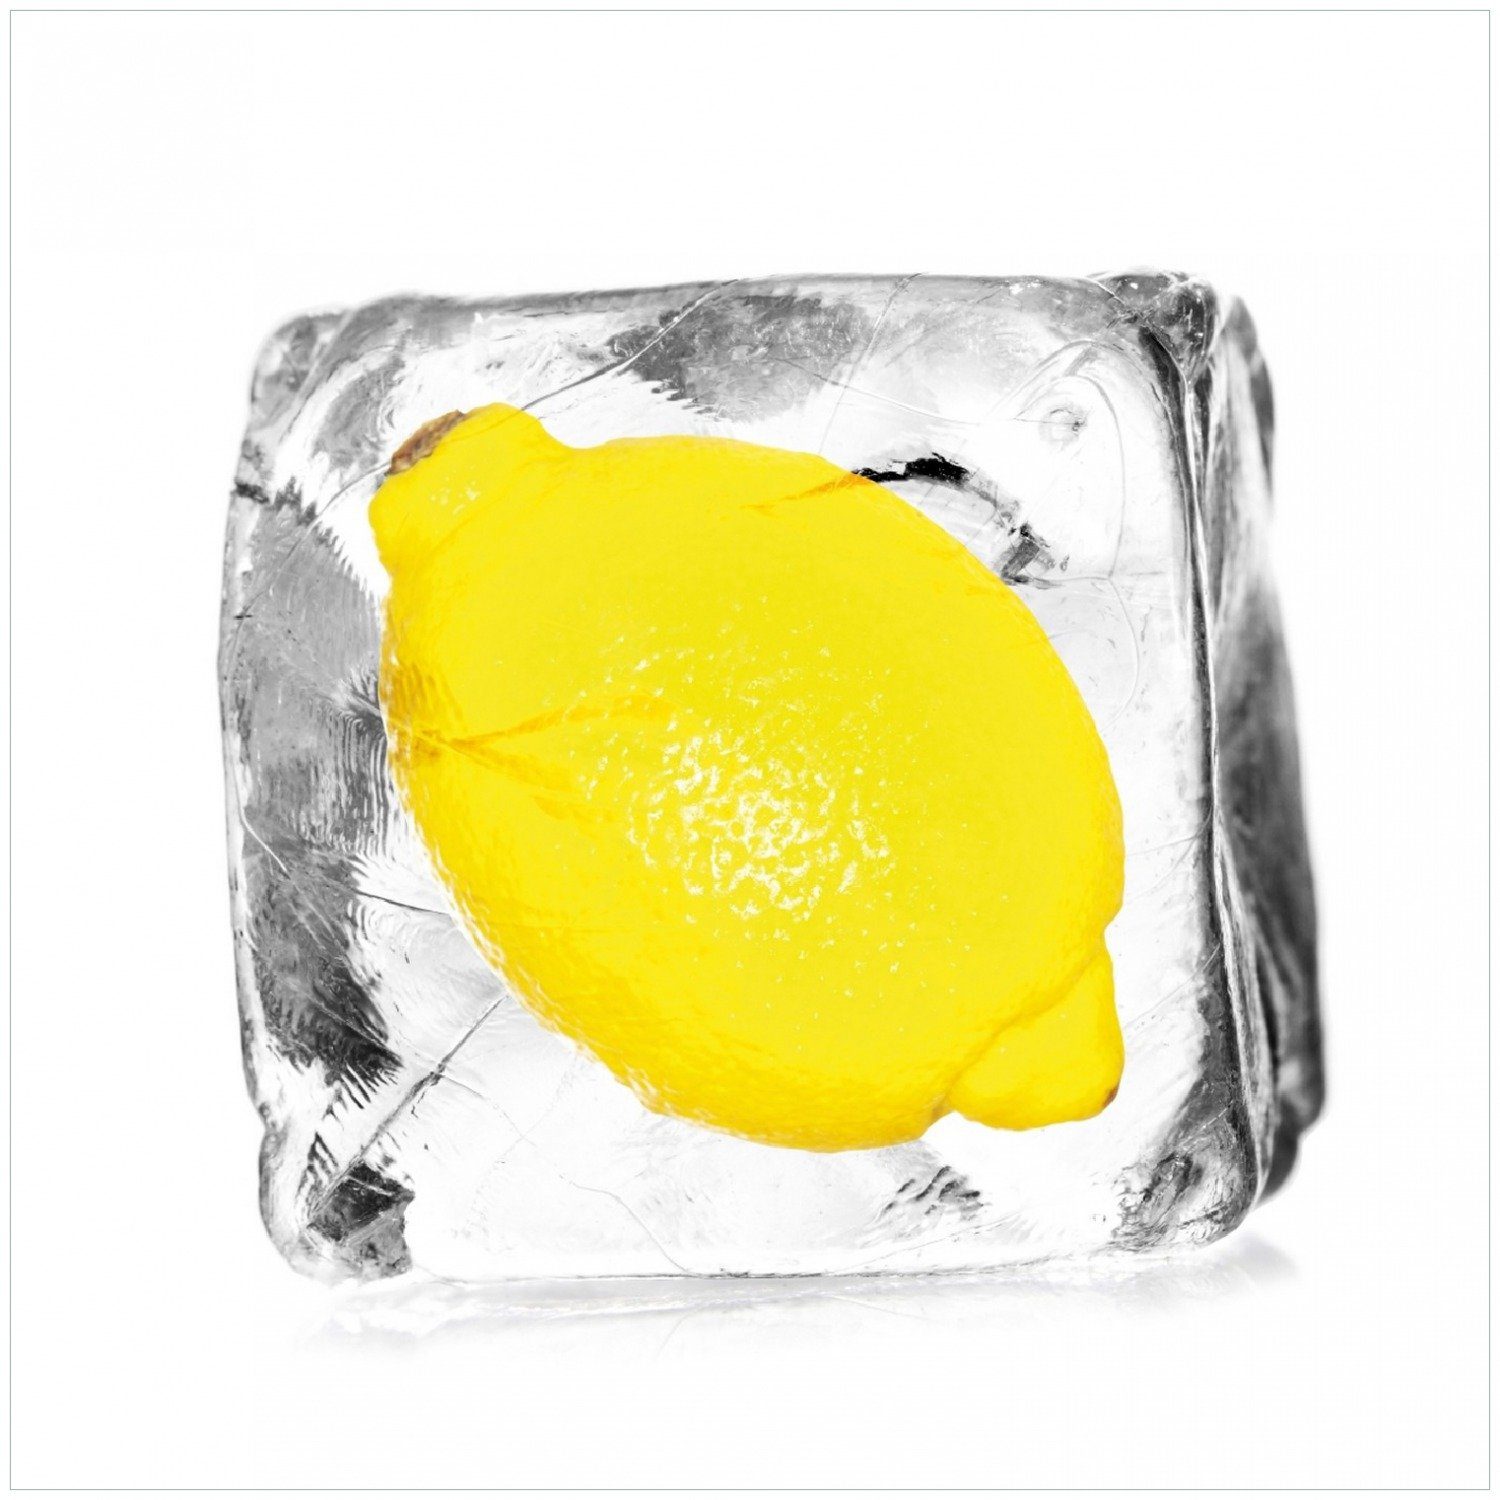 Wallario Memoboard Zitrone in Eiswürfel - Eiskaltes Obst